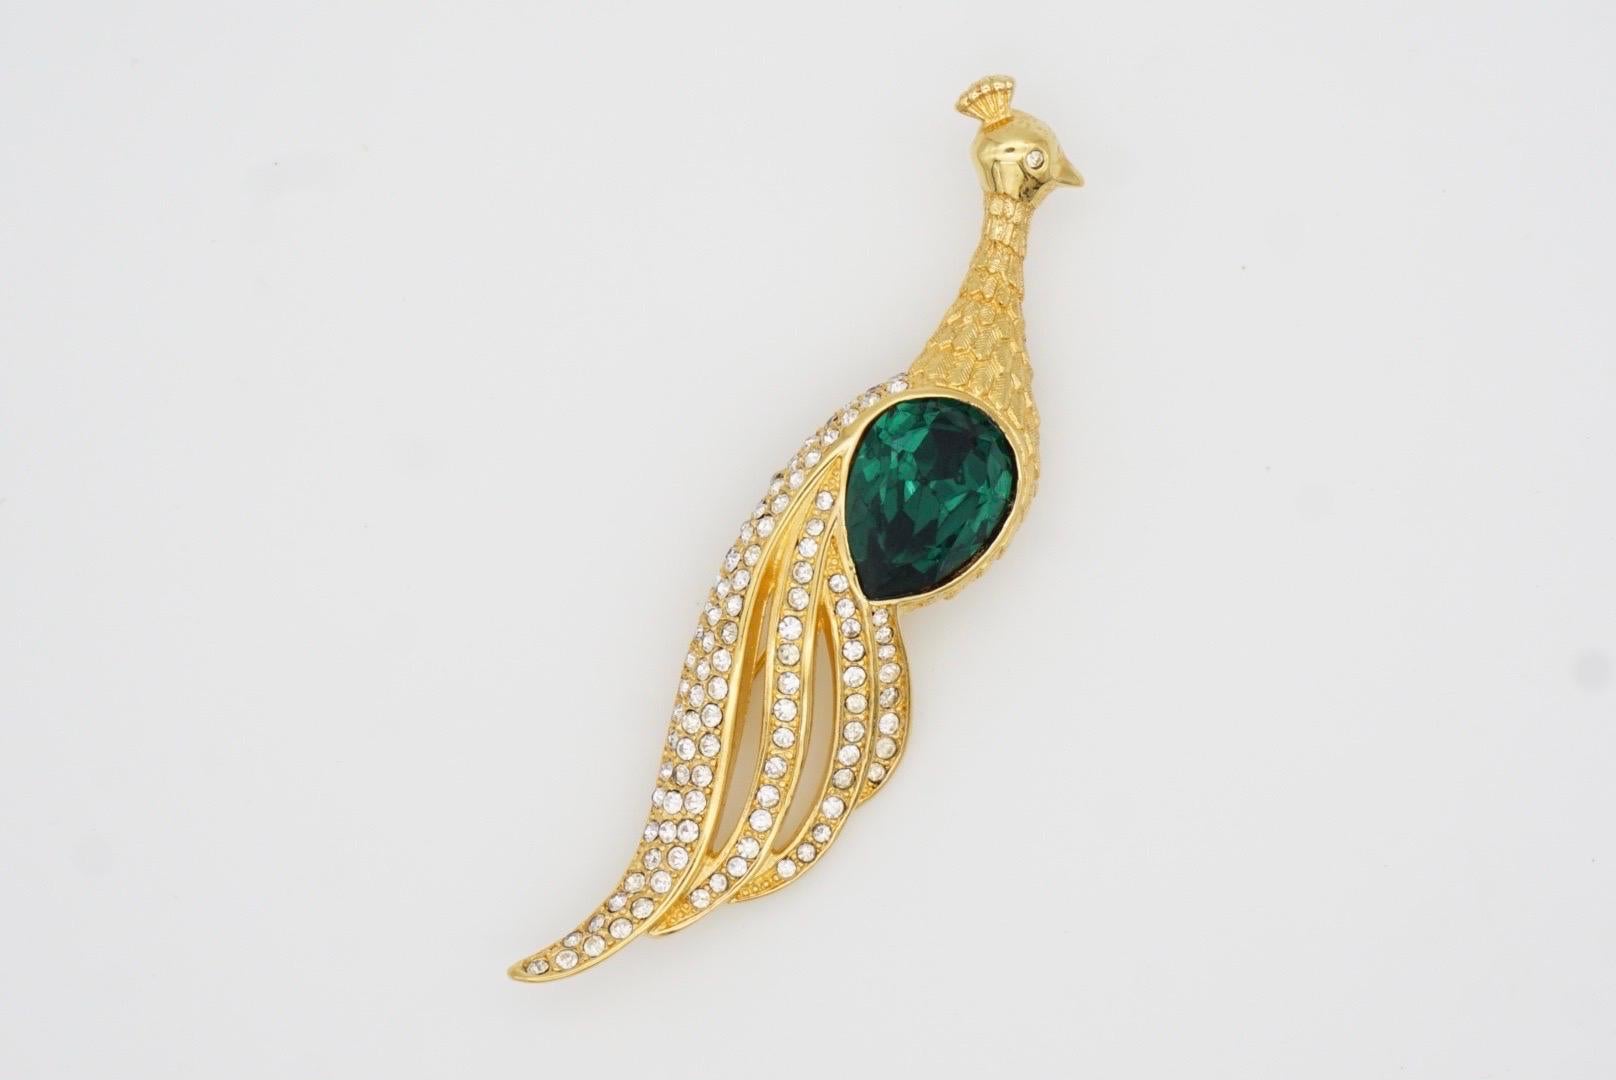 Christian Dior Vintage 1980s Long Vivid Peacock Emerald Crystal Openwork Brooch For Sale 4